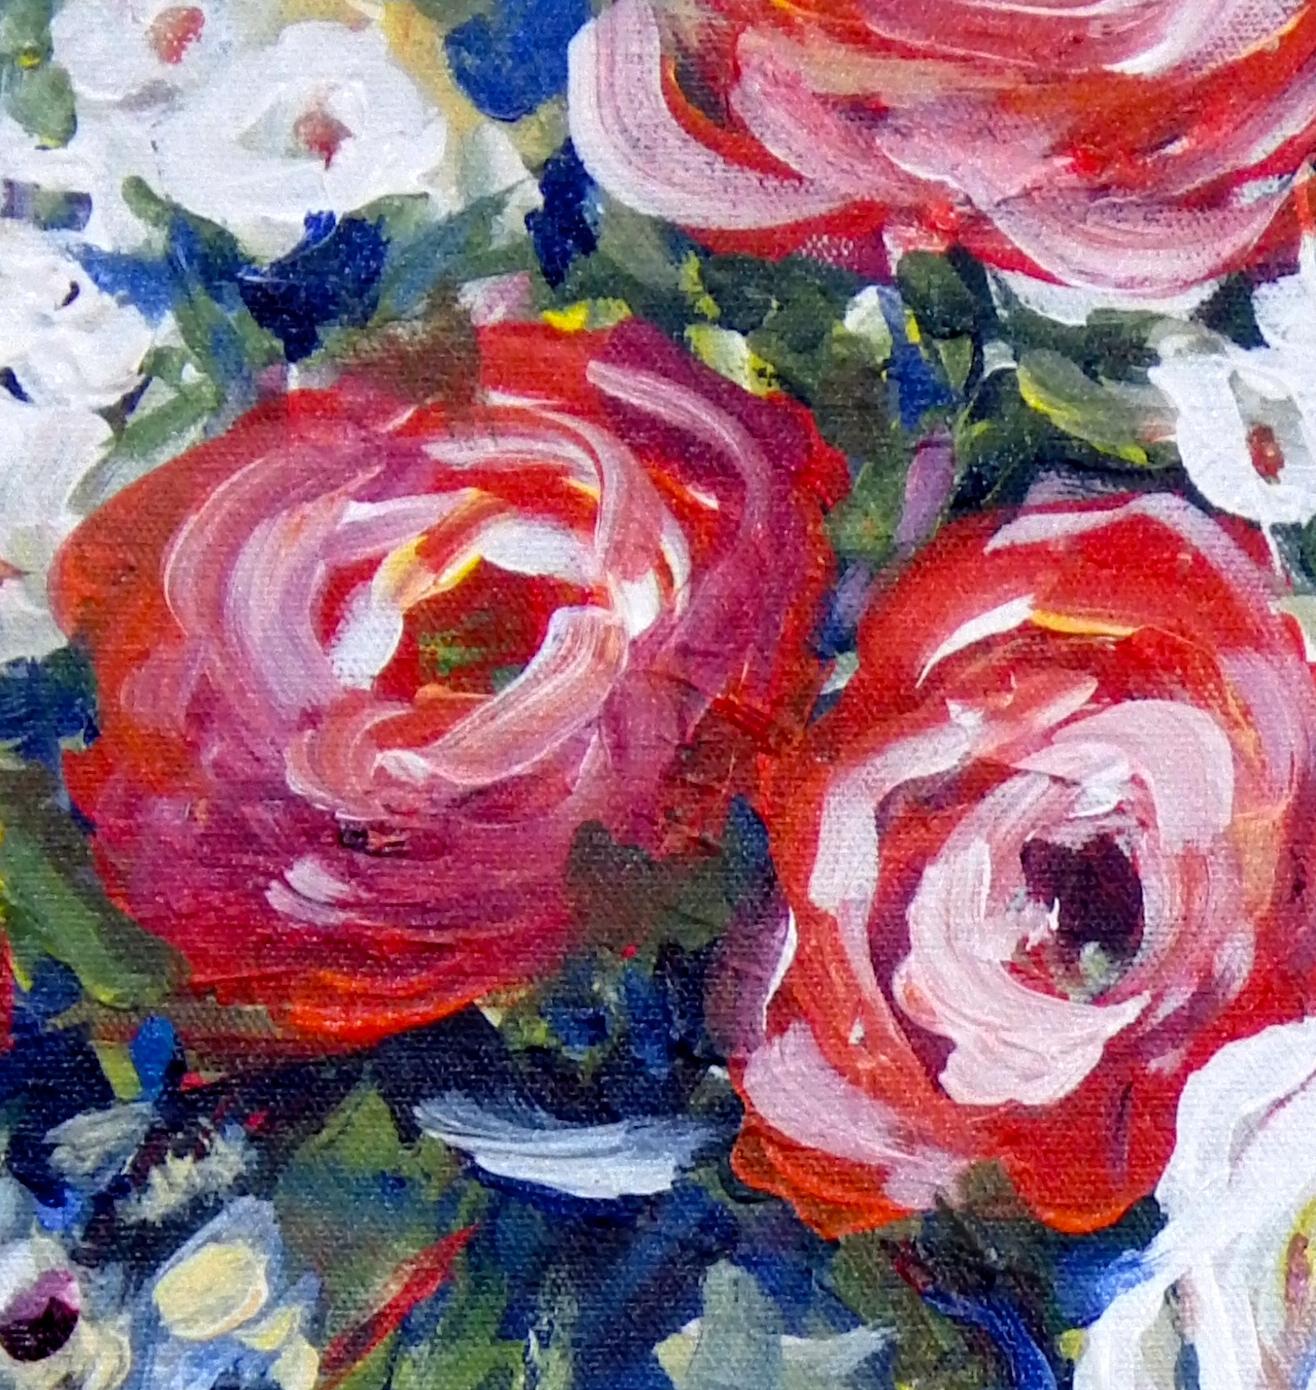 Roses, Original Contemporary Impressionist Floral Still Life Painting, 2014
20